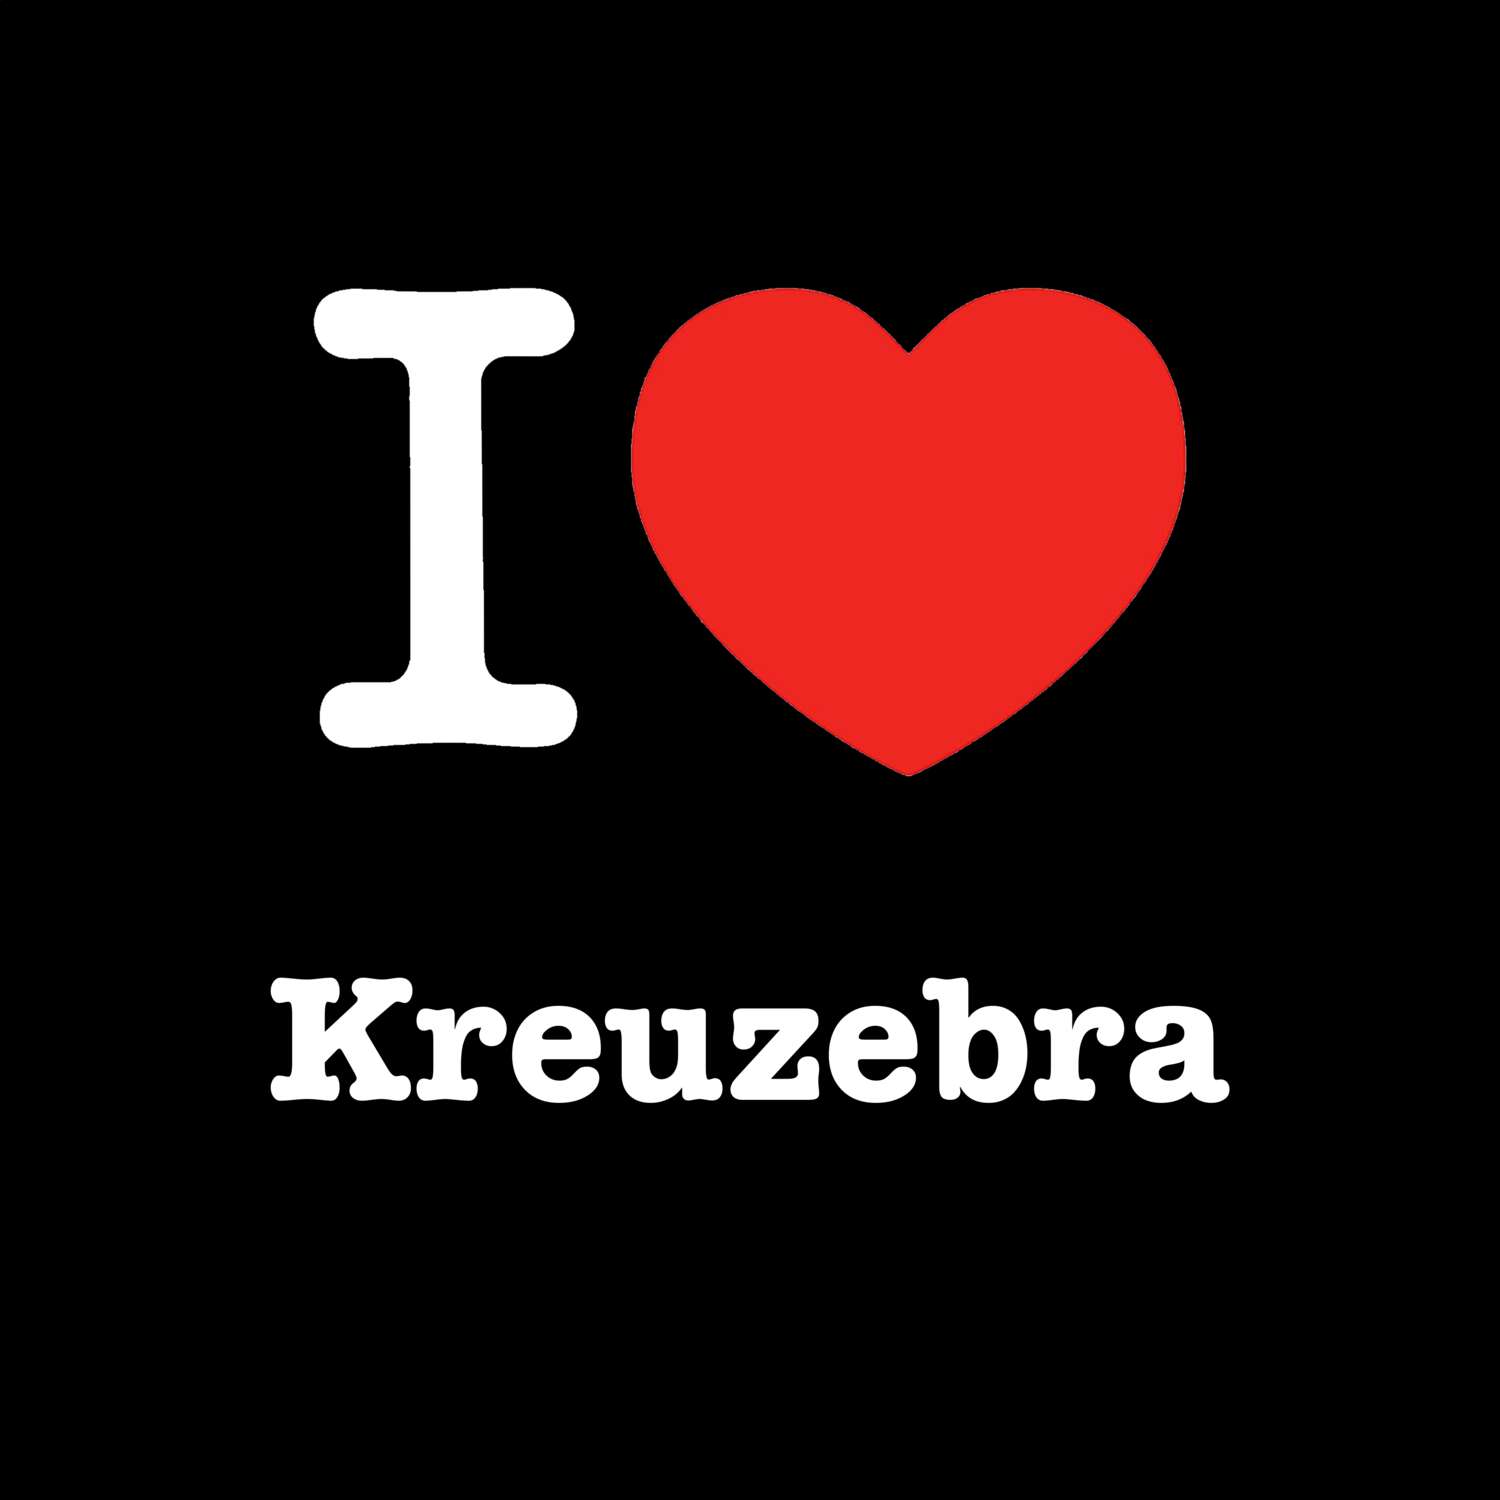 Kreuzebra T-Shirt »I love«